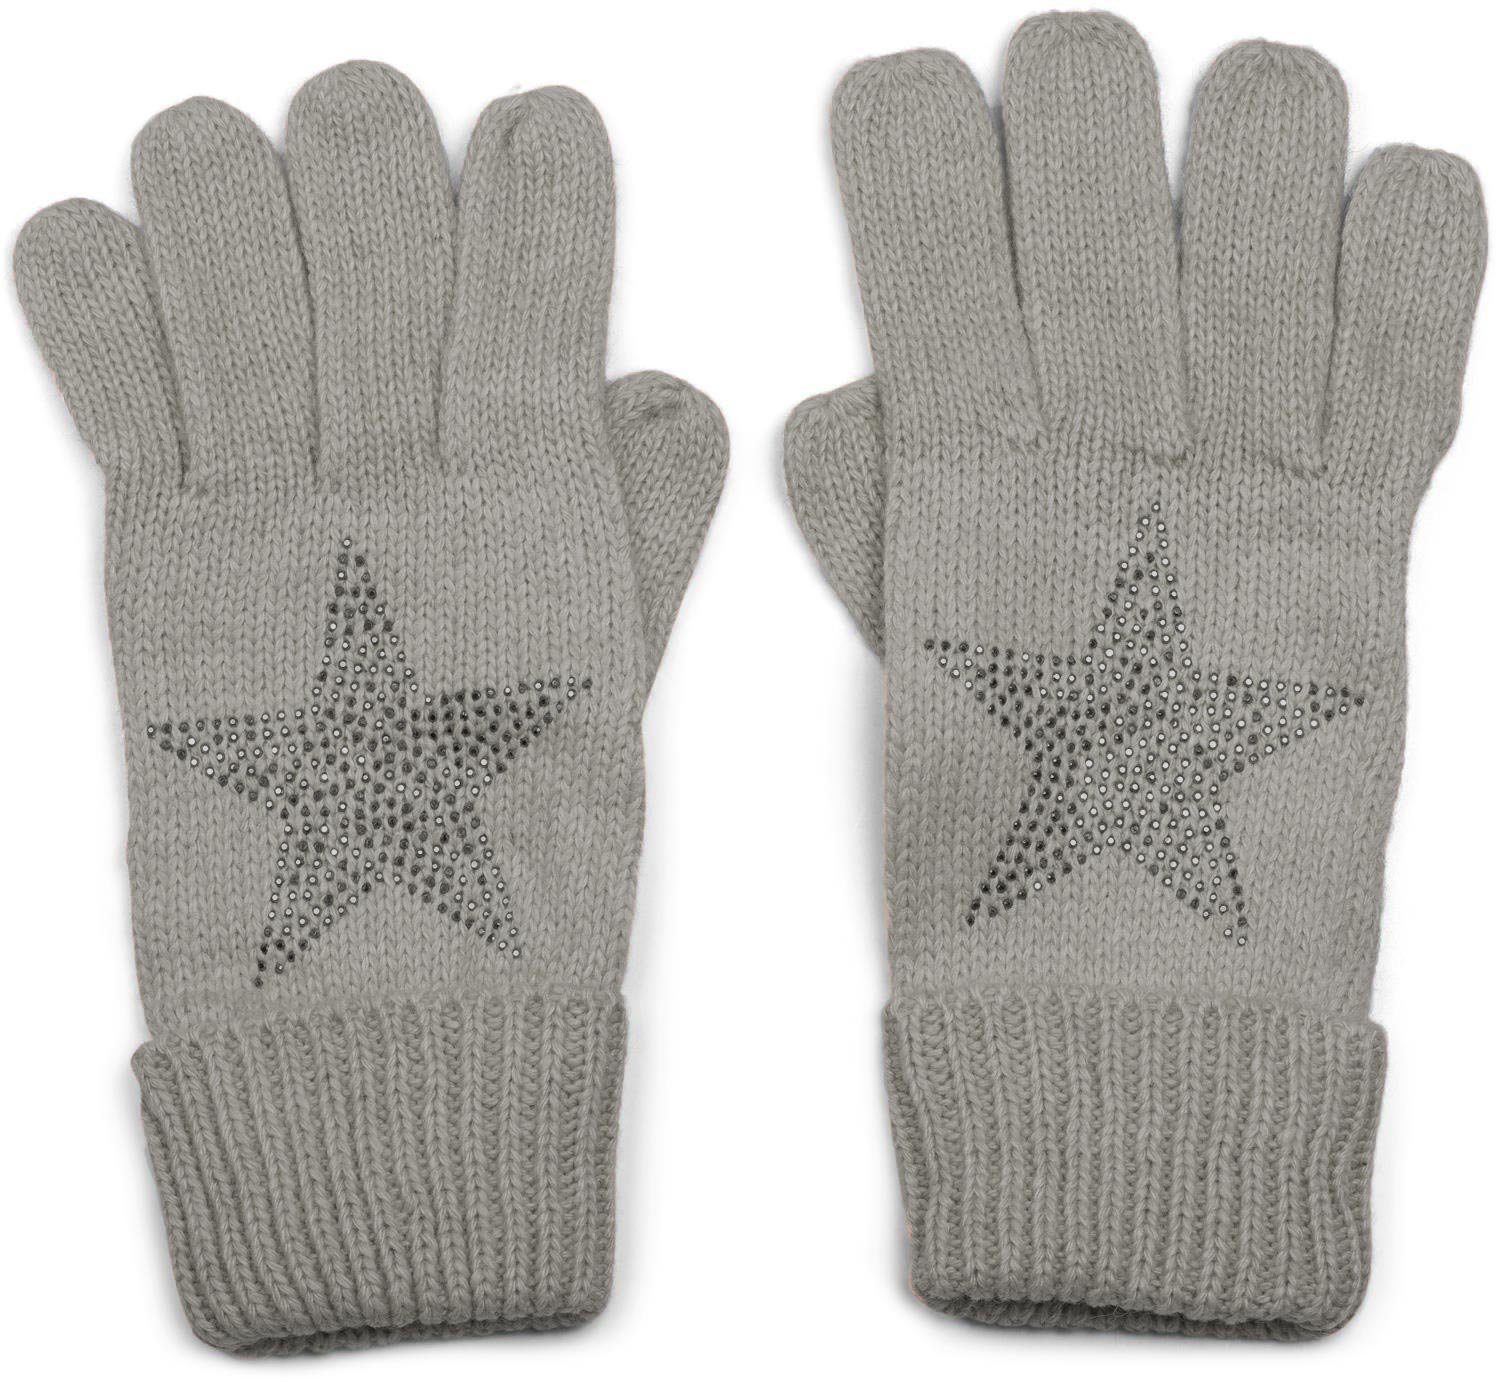 styleBREAKER Strickhandschuhe Strick Handschuhe mit Strass Stern Grau